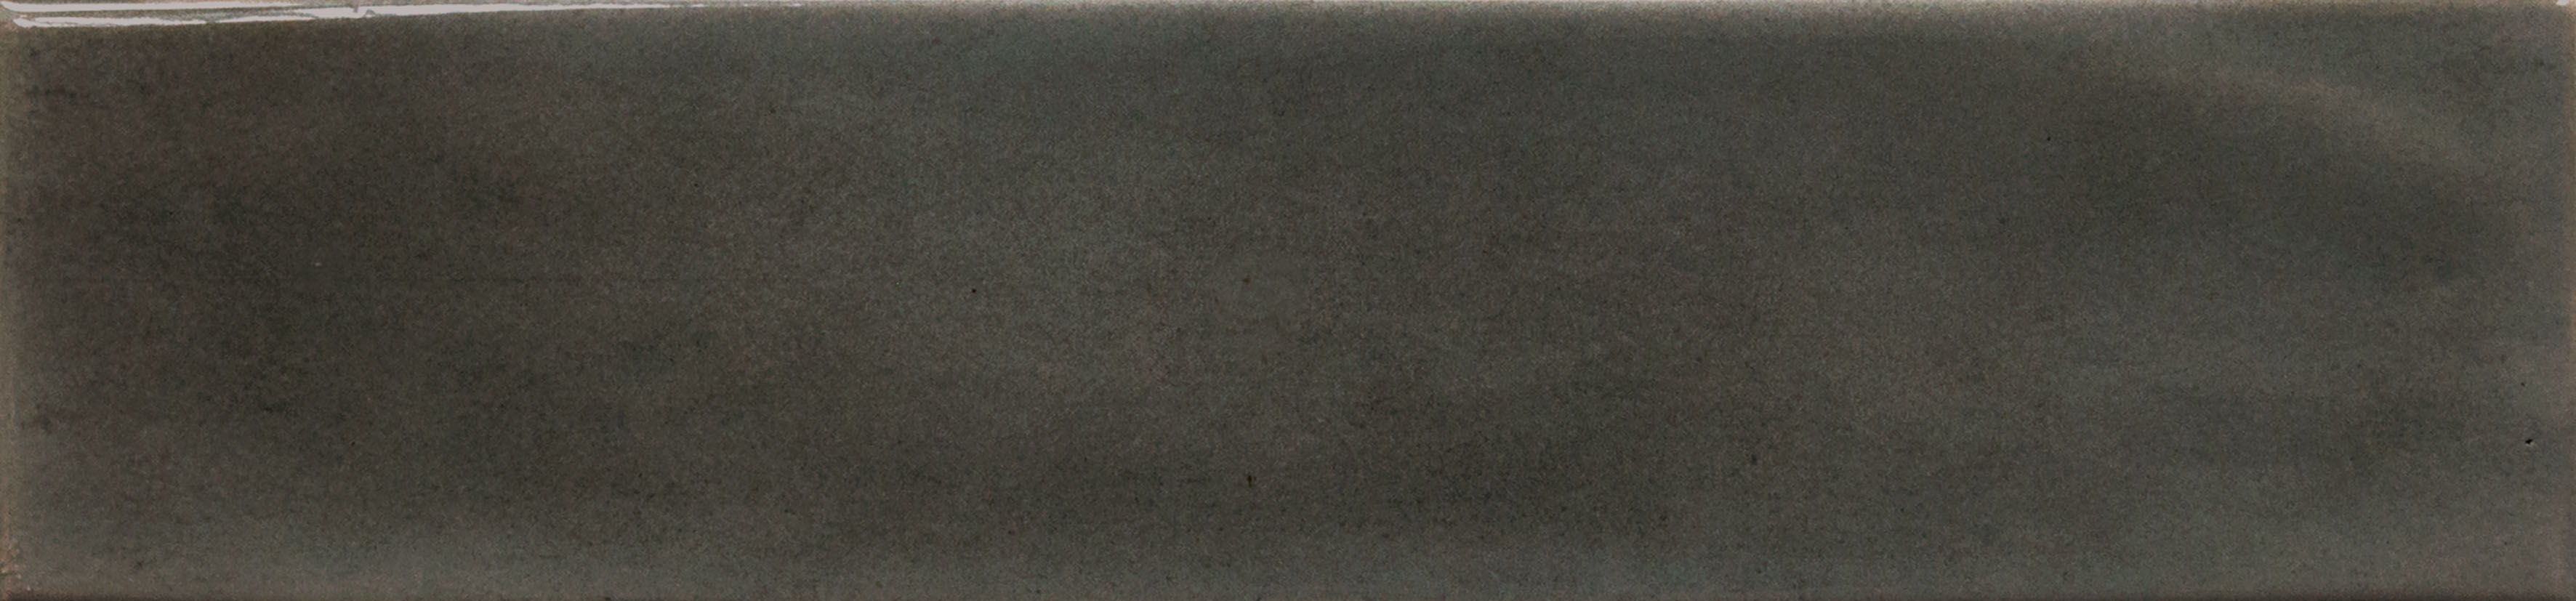 Catalea Gres Nyborg Metrofliese Schwarz glänzend 7,5x30 cm  